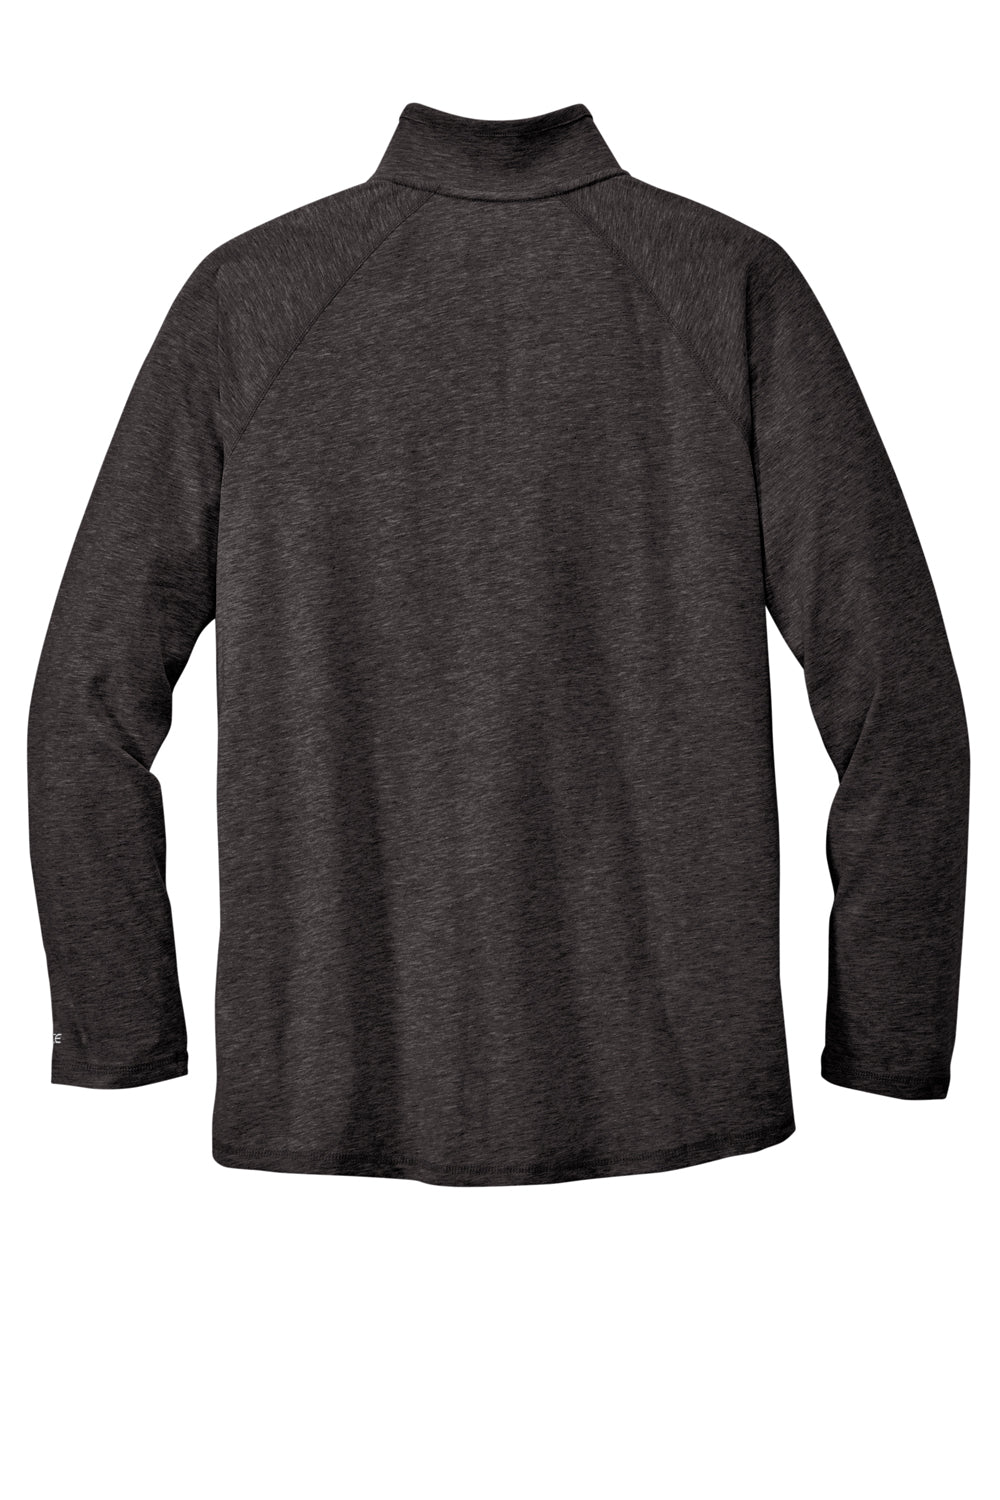 Carhartt CT104255 Mens Force Moisture Wicking 1/4 Zip Long Sleeve T-Shirt w/ Pocket Heather Carbon Grey Flat Back